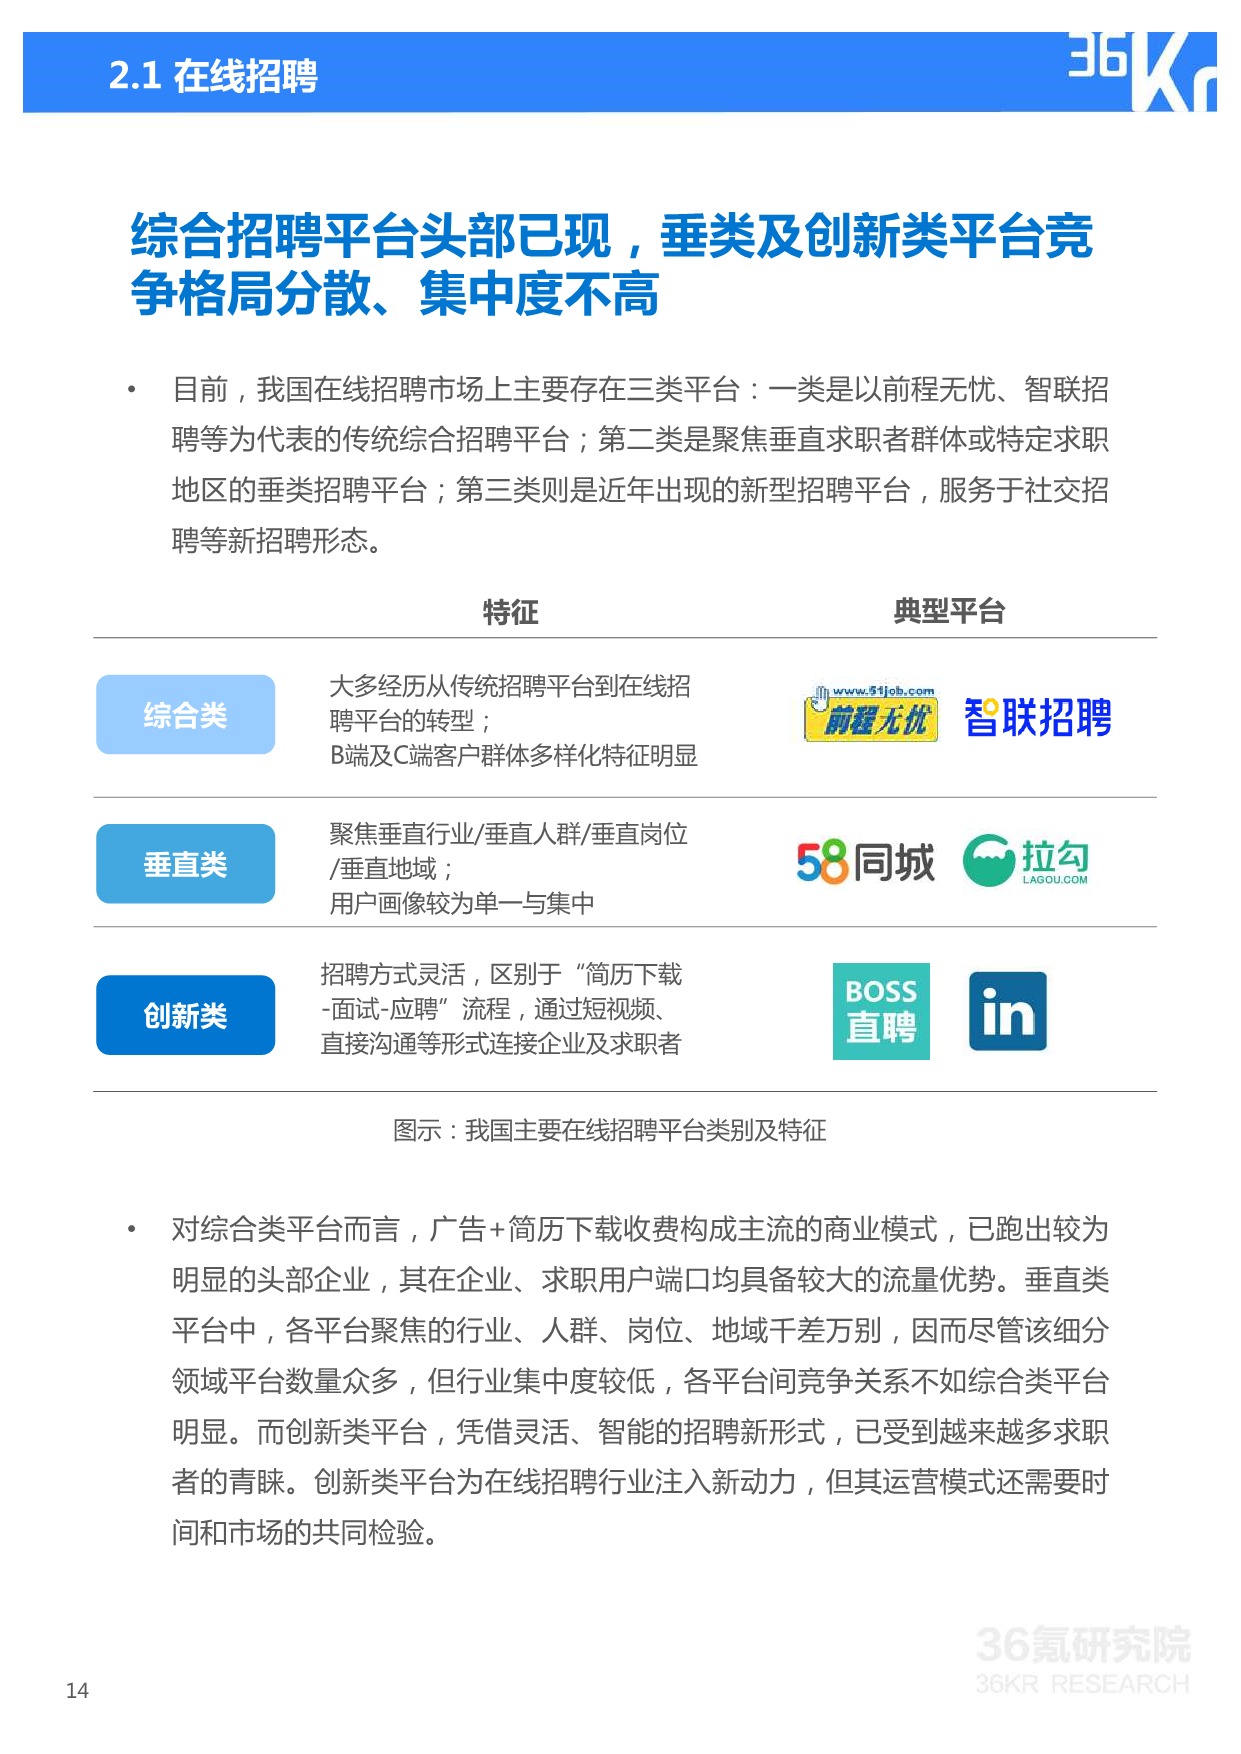 36Kr-2021年中国人力资源服务行业研究报告_14.jpeg